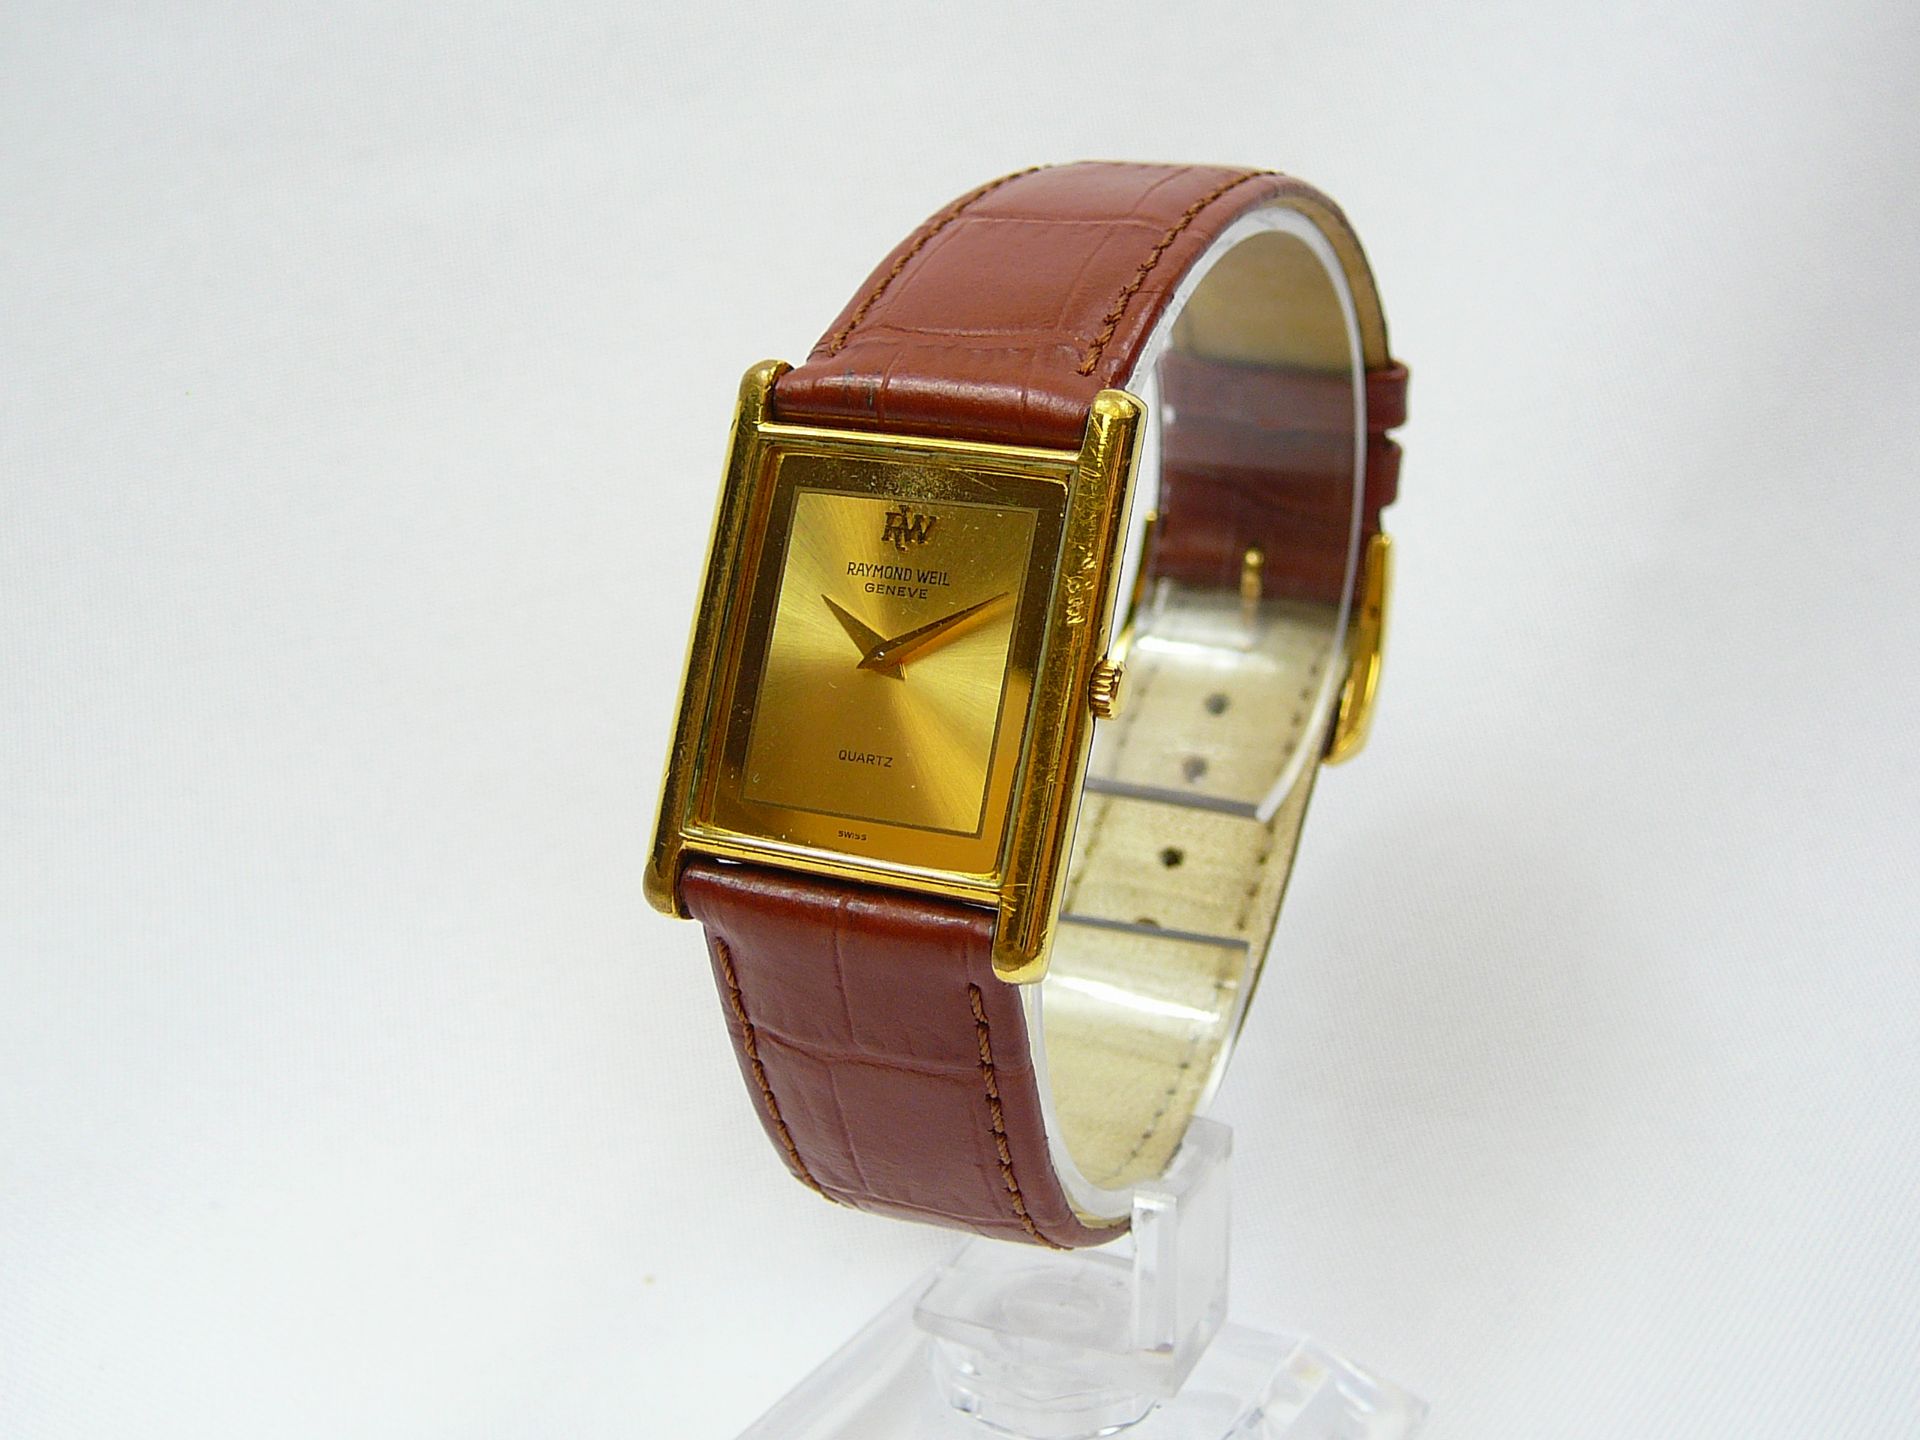 Ladies Raymond Weil Wrist Watch - Image 2 of 3